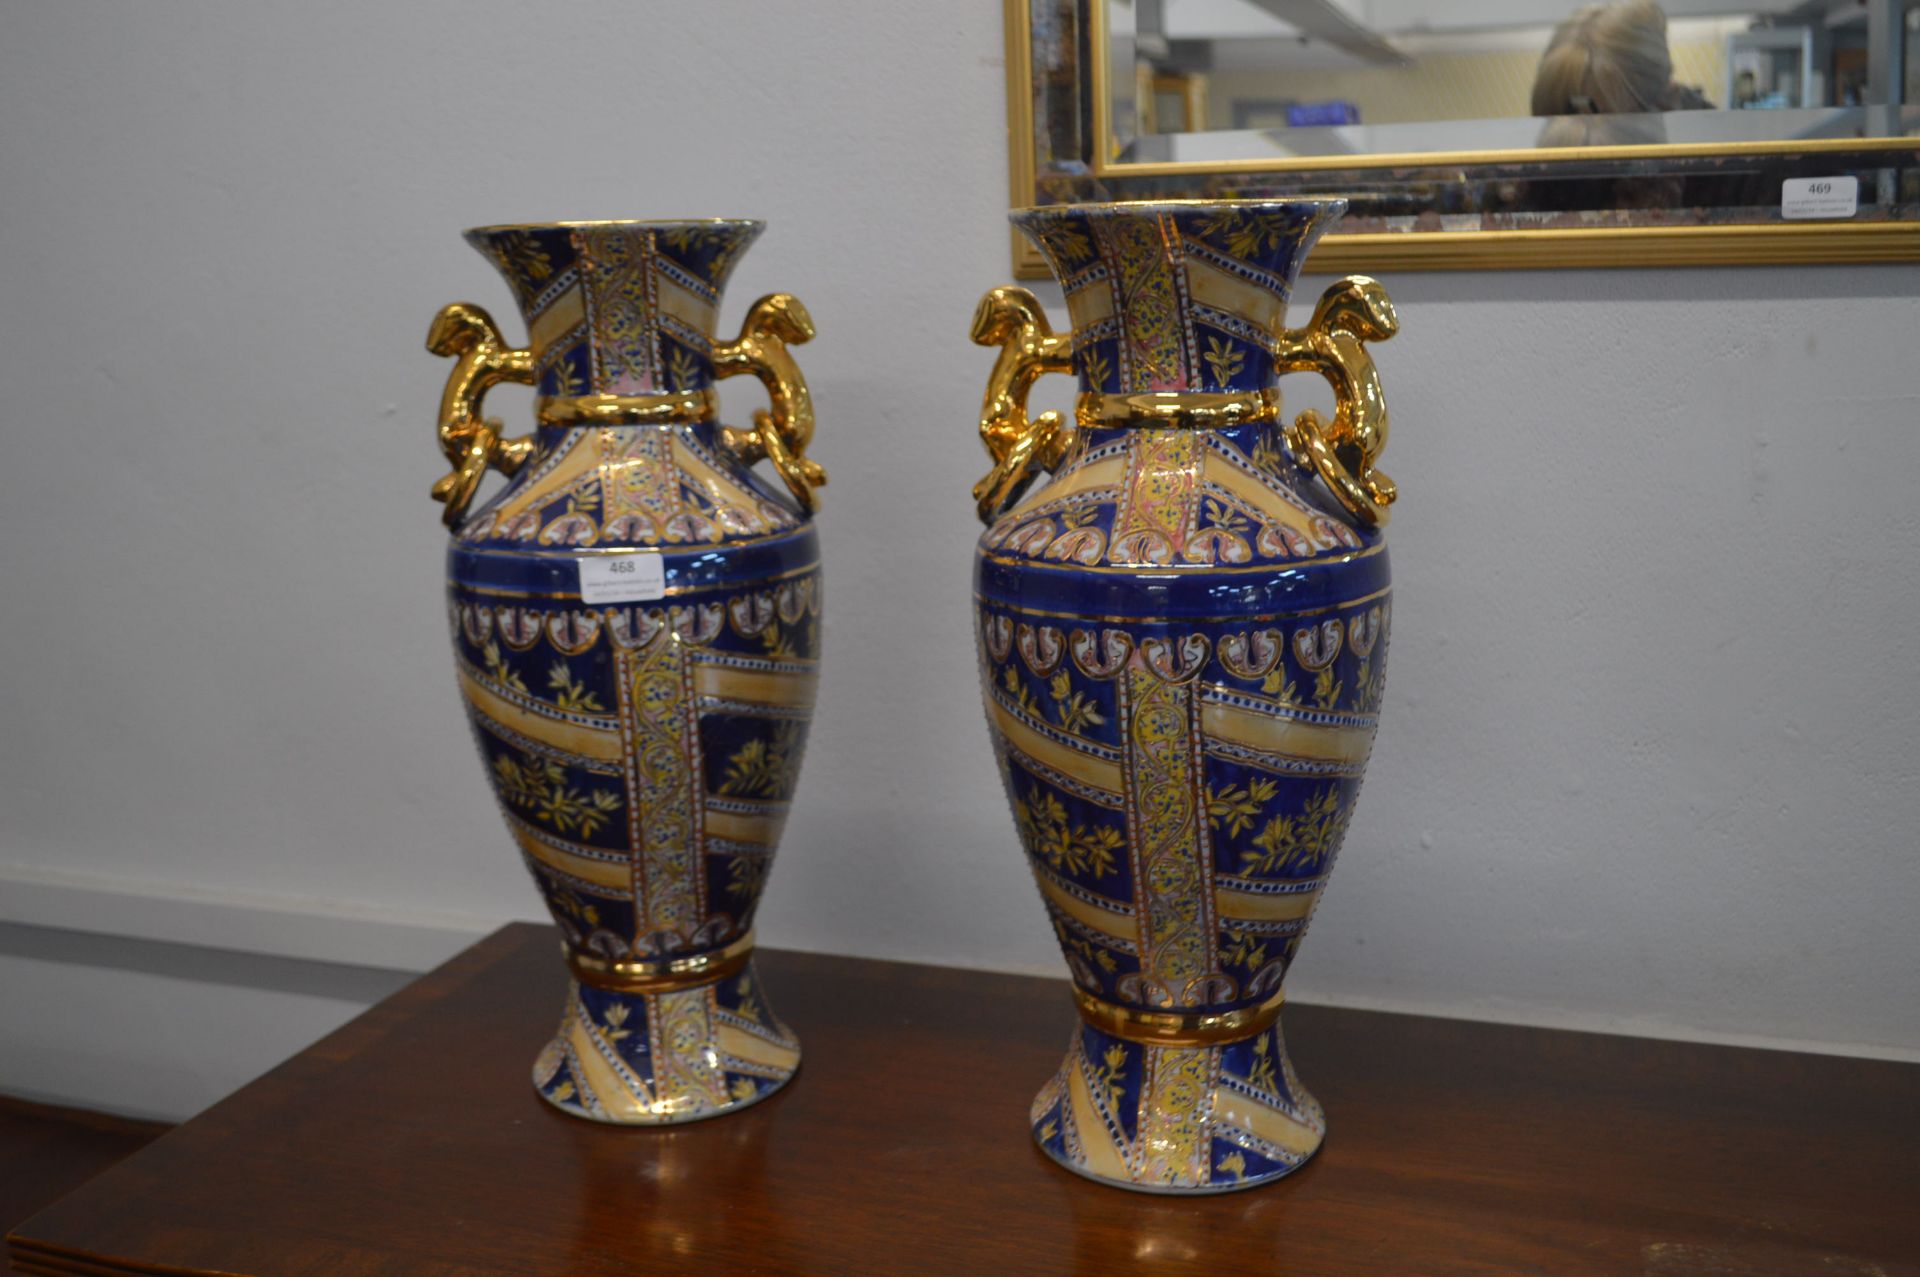 Pair of Large Decorative Urns